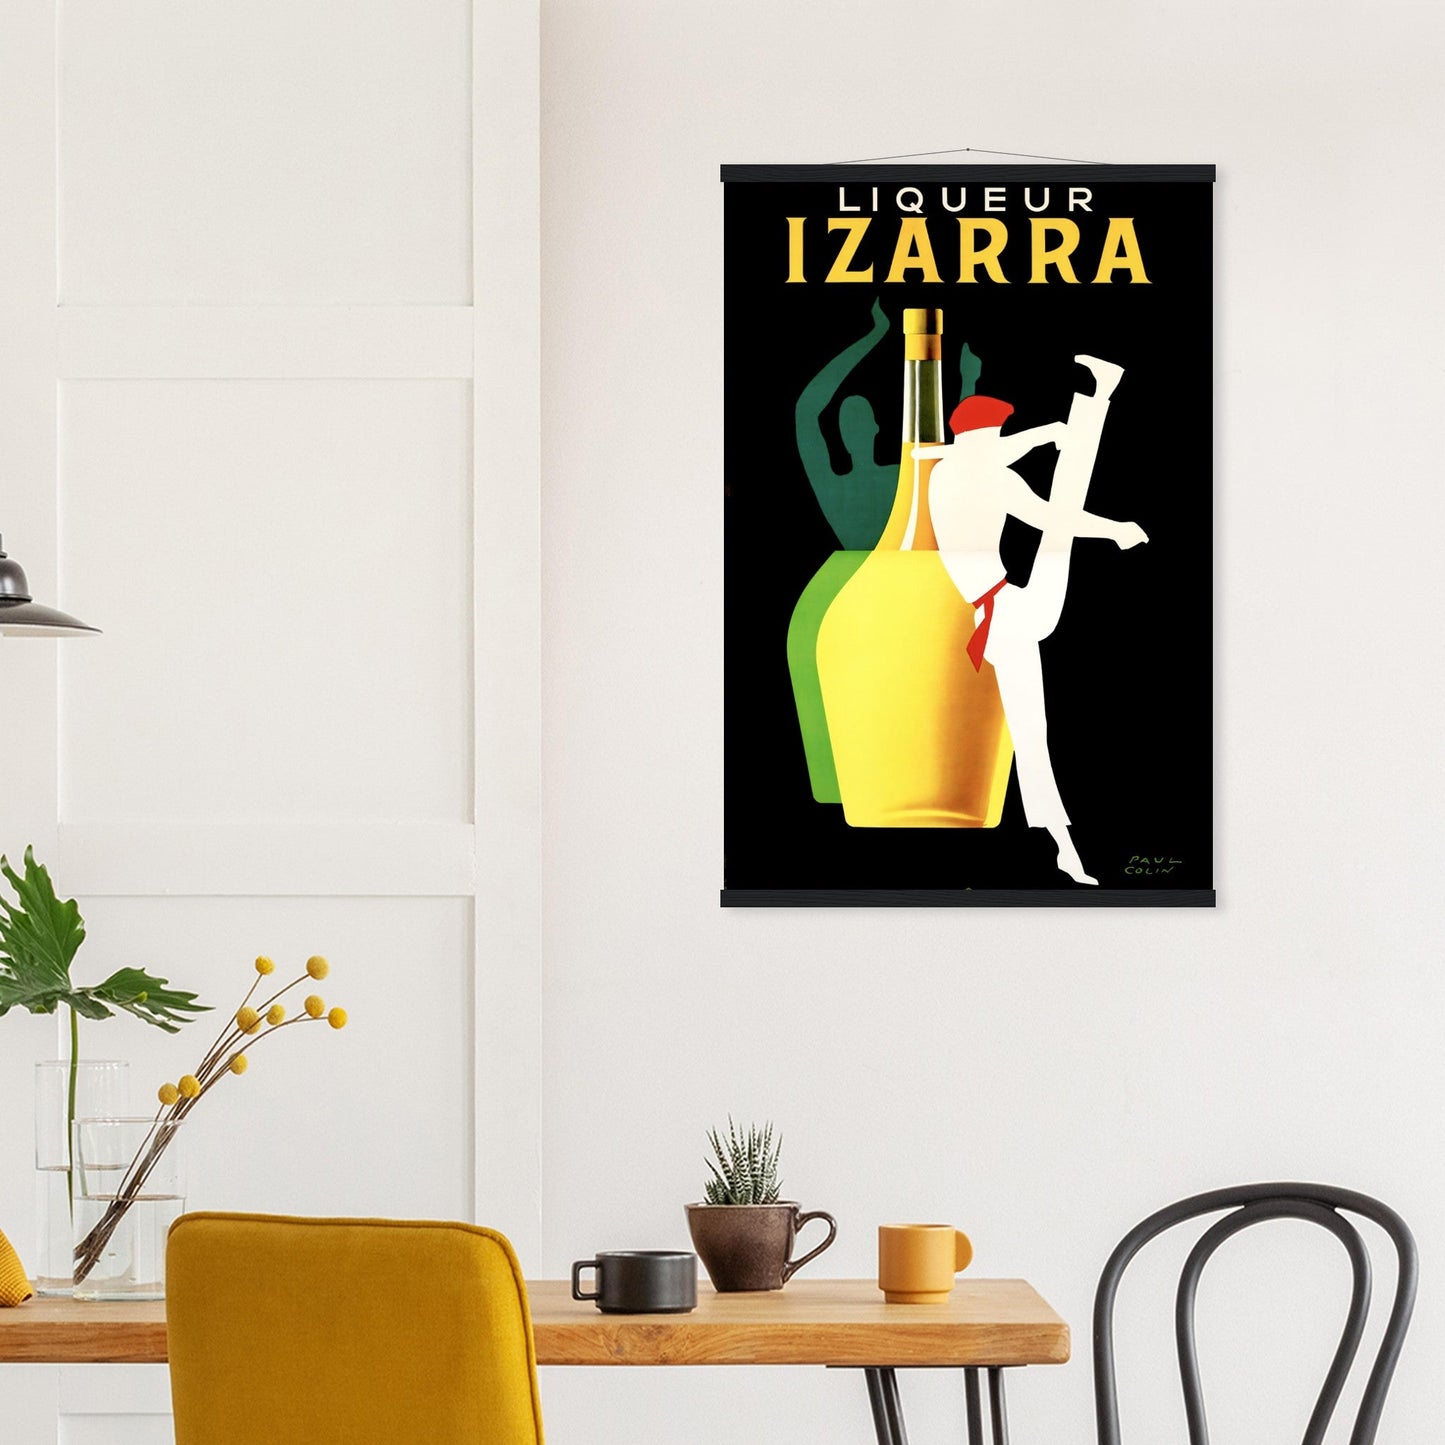 Izarra Vintage Poster reprint on premium matte paper - Posterify